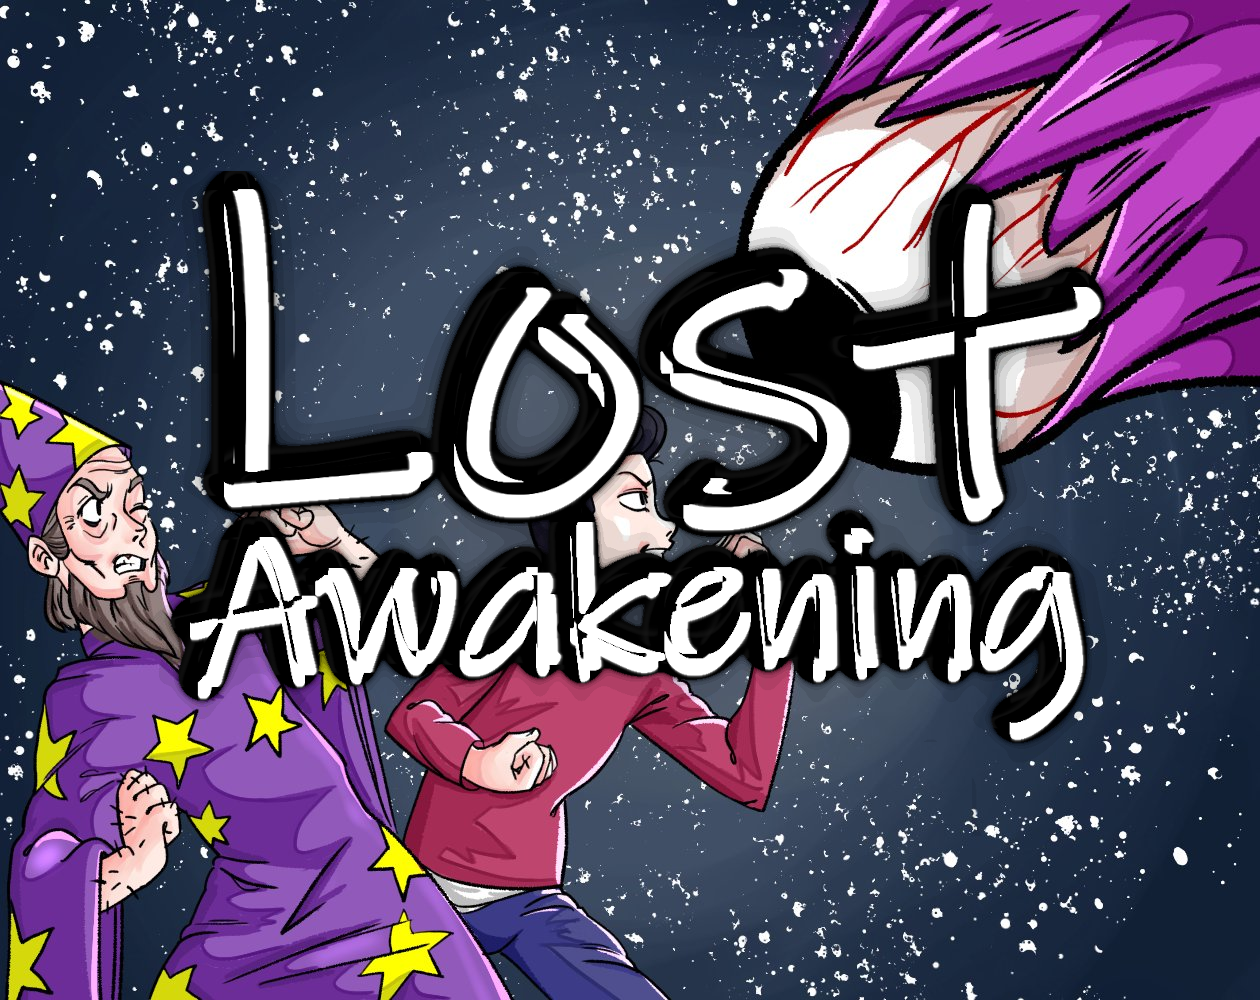 Lost Awakening Presskit Image